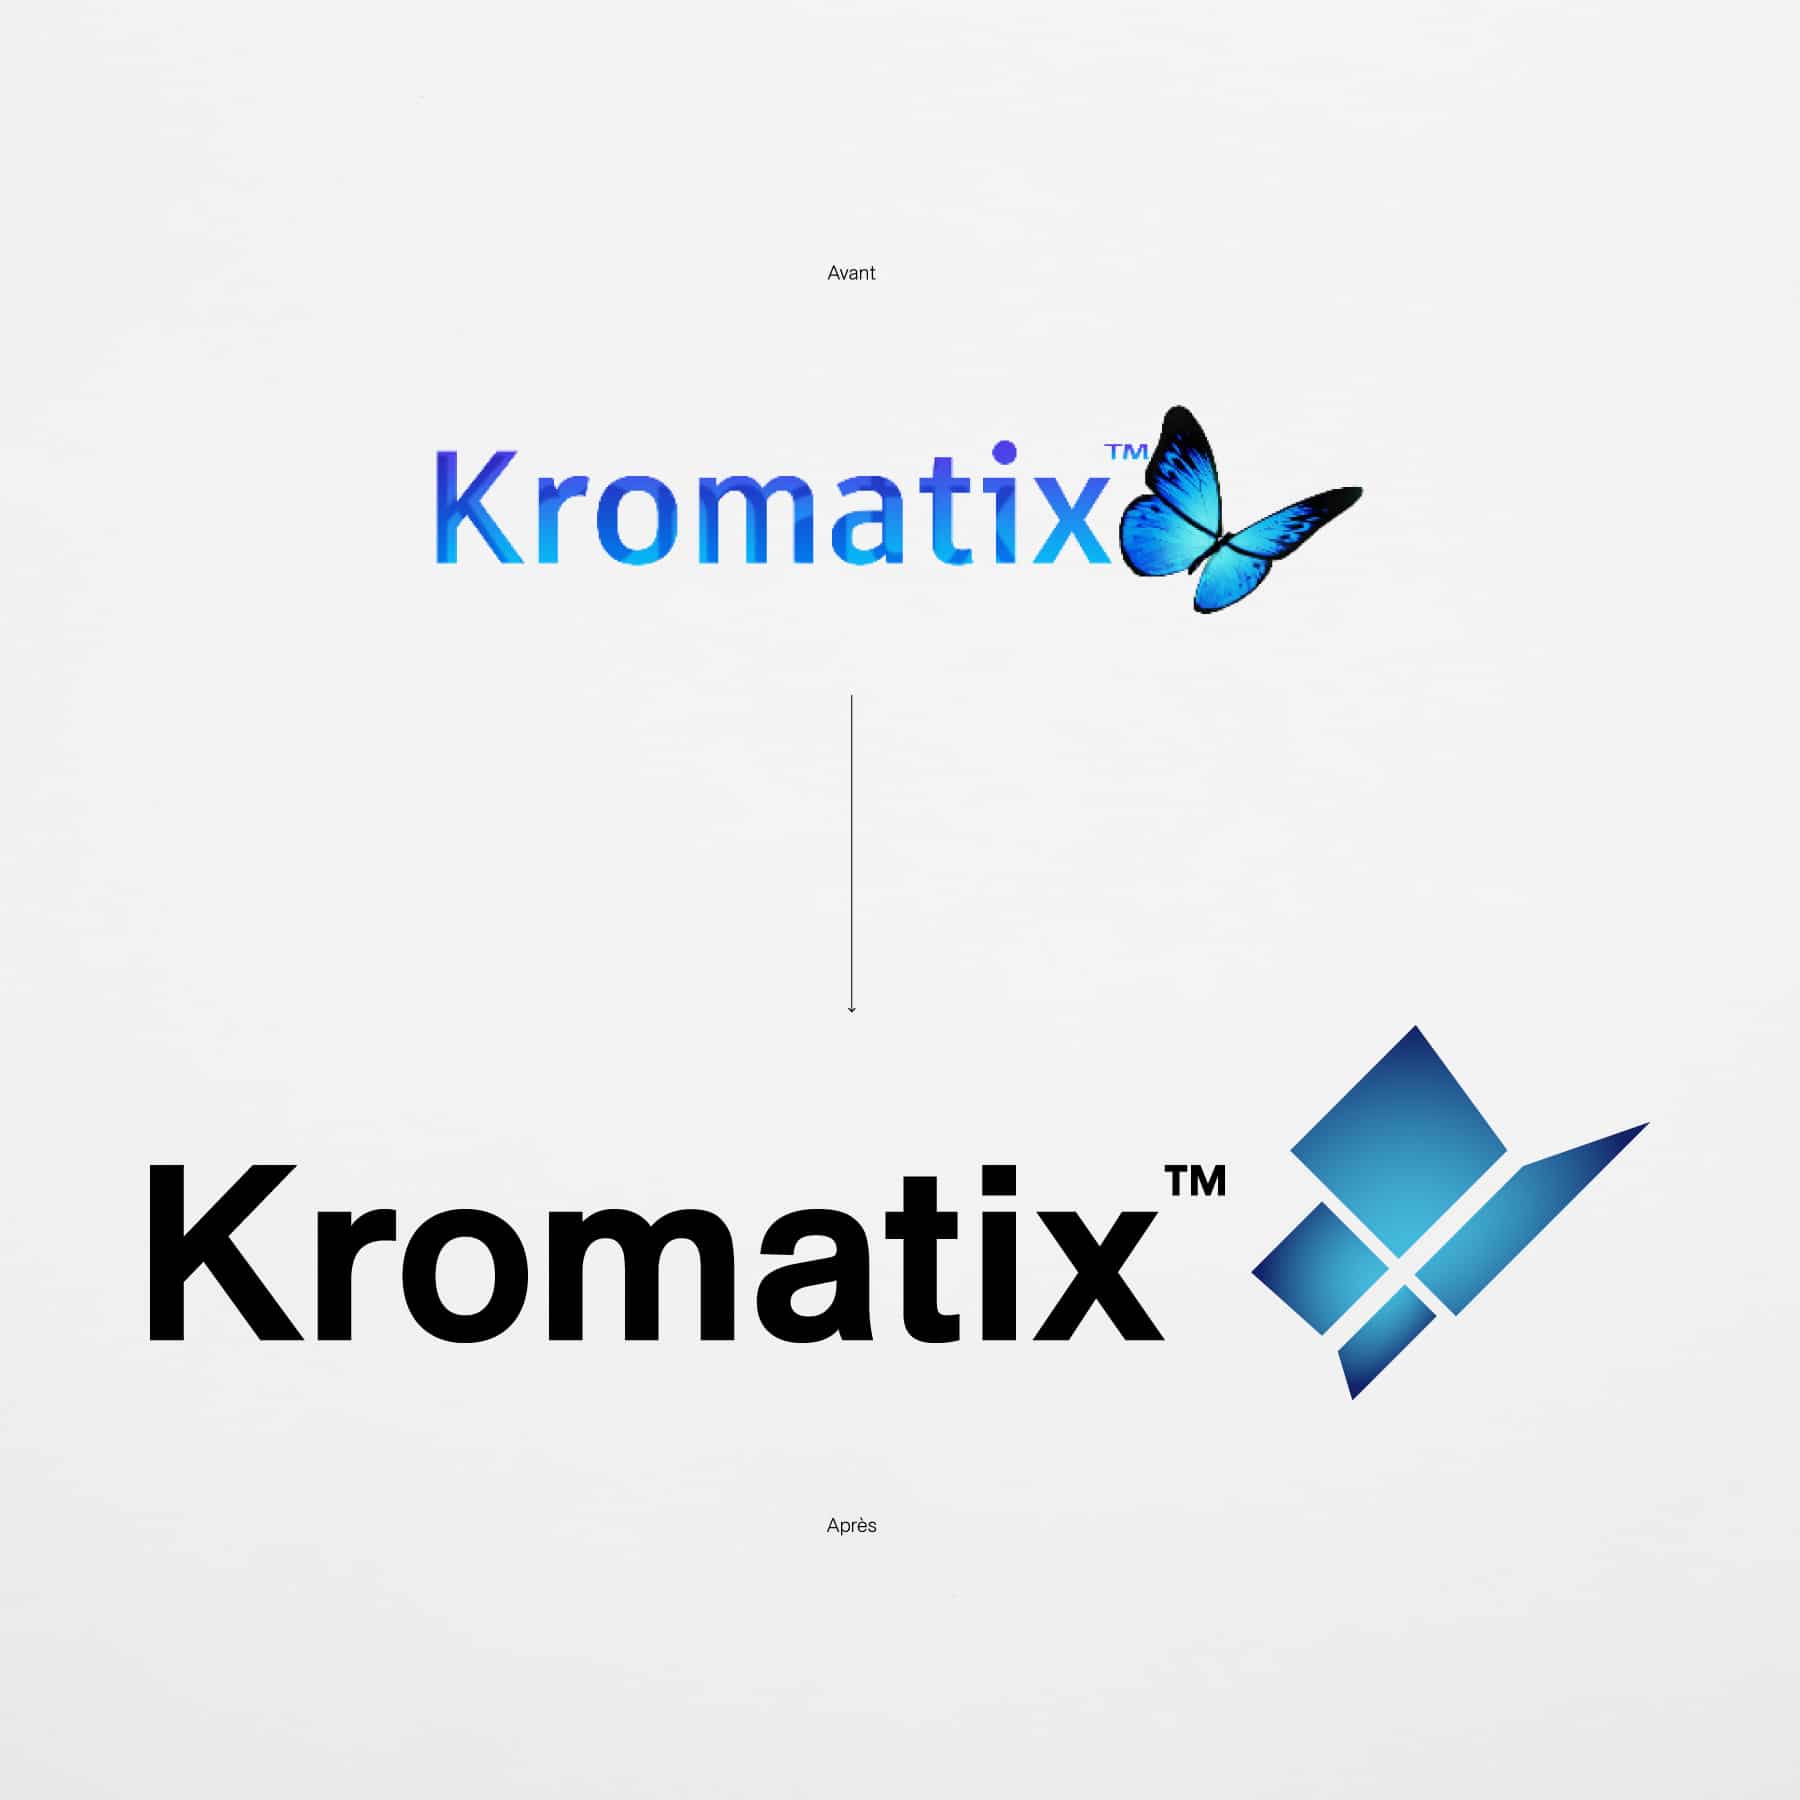 Logo Kromatix avant/après notre intervention.